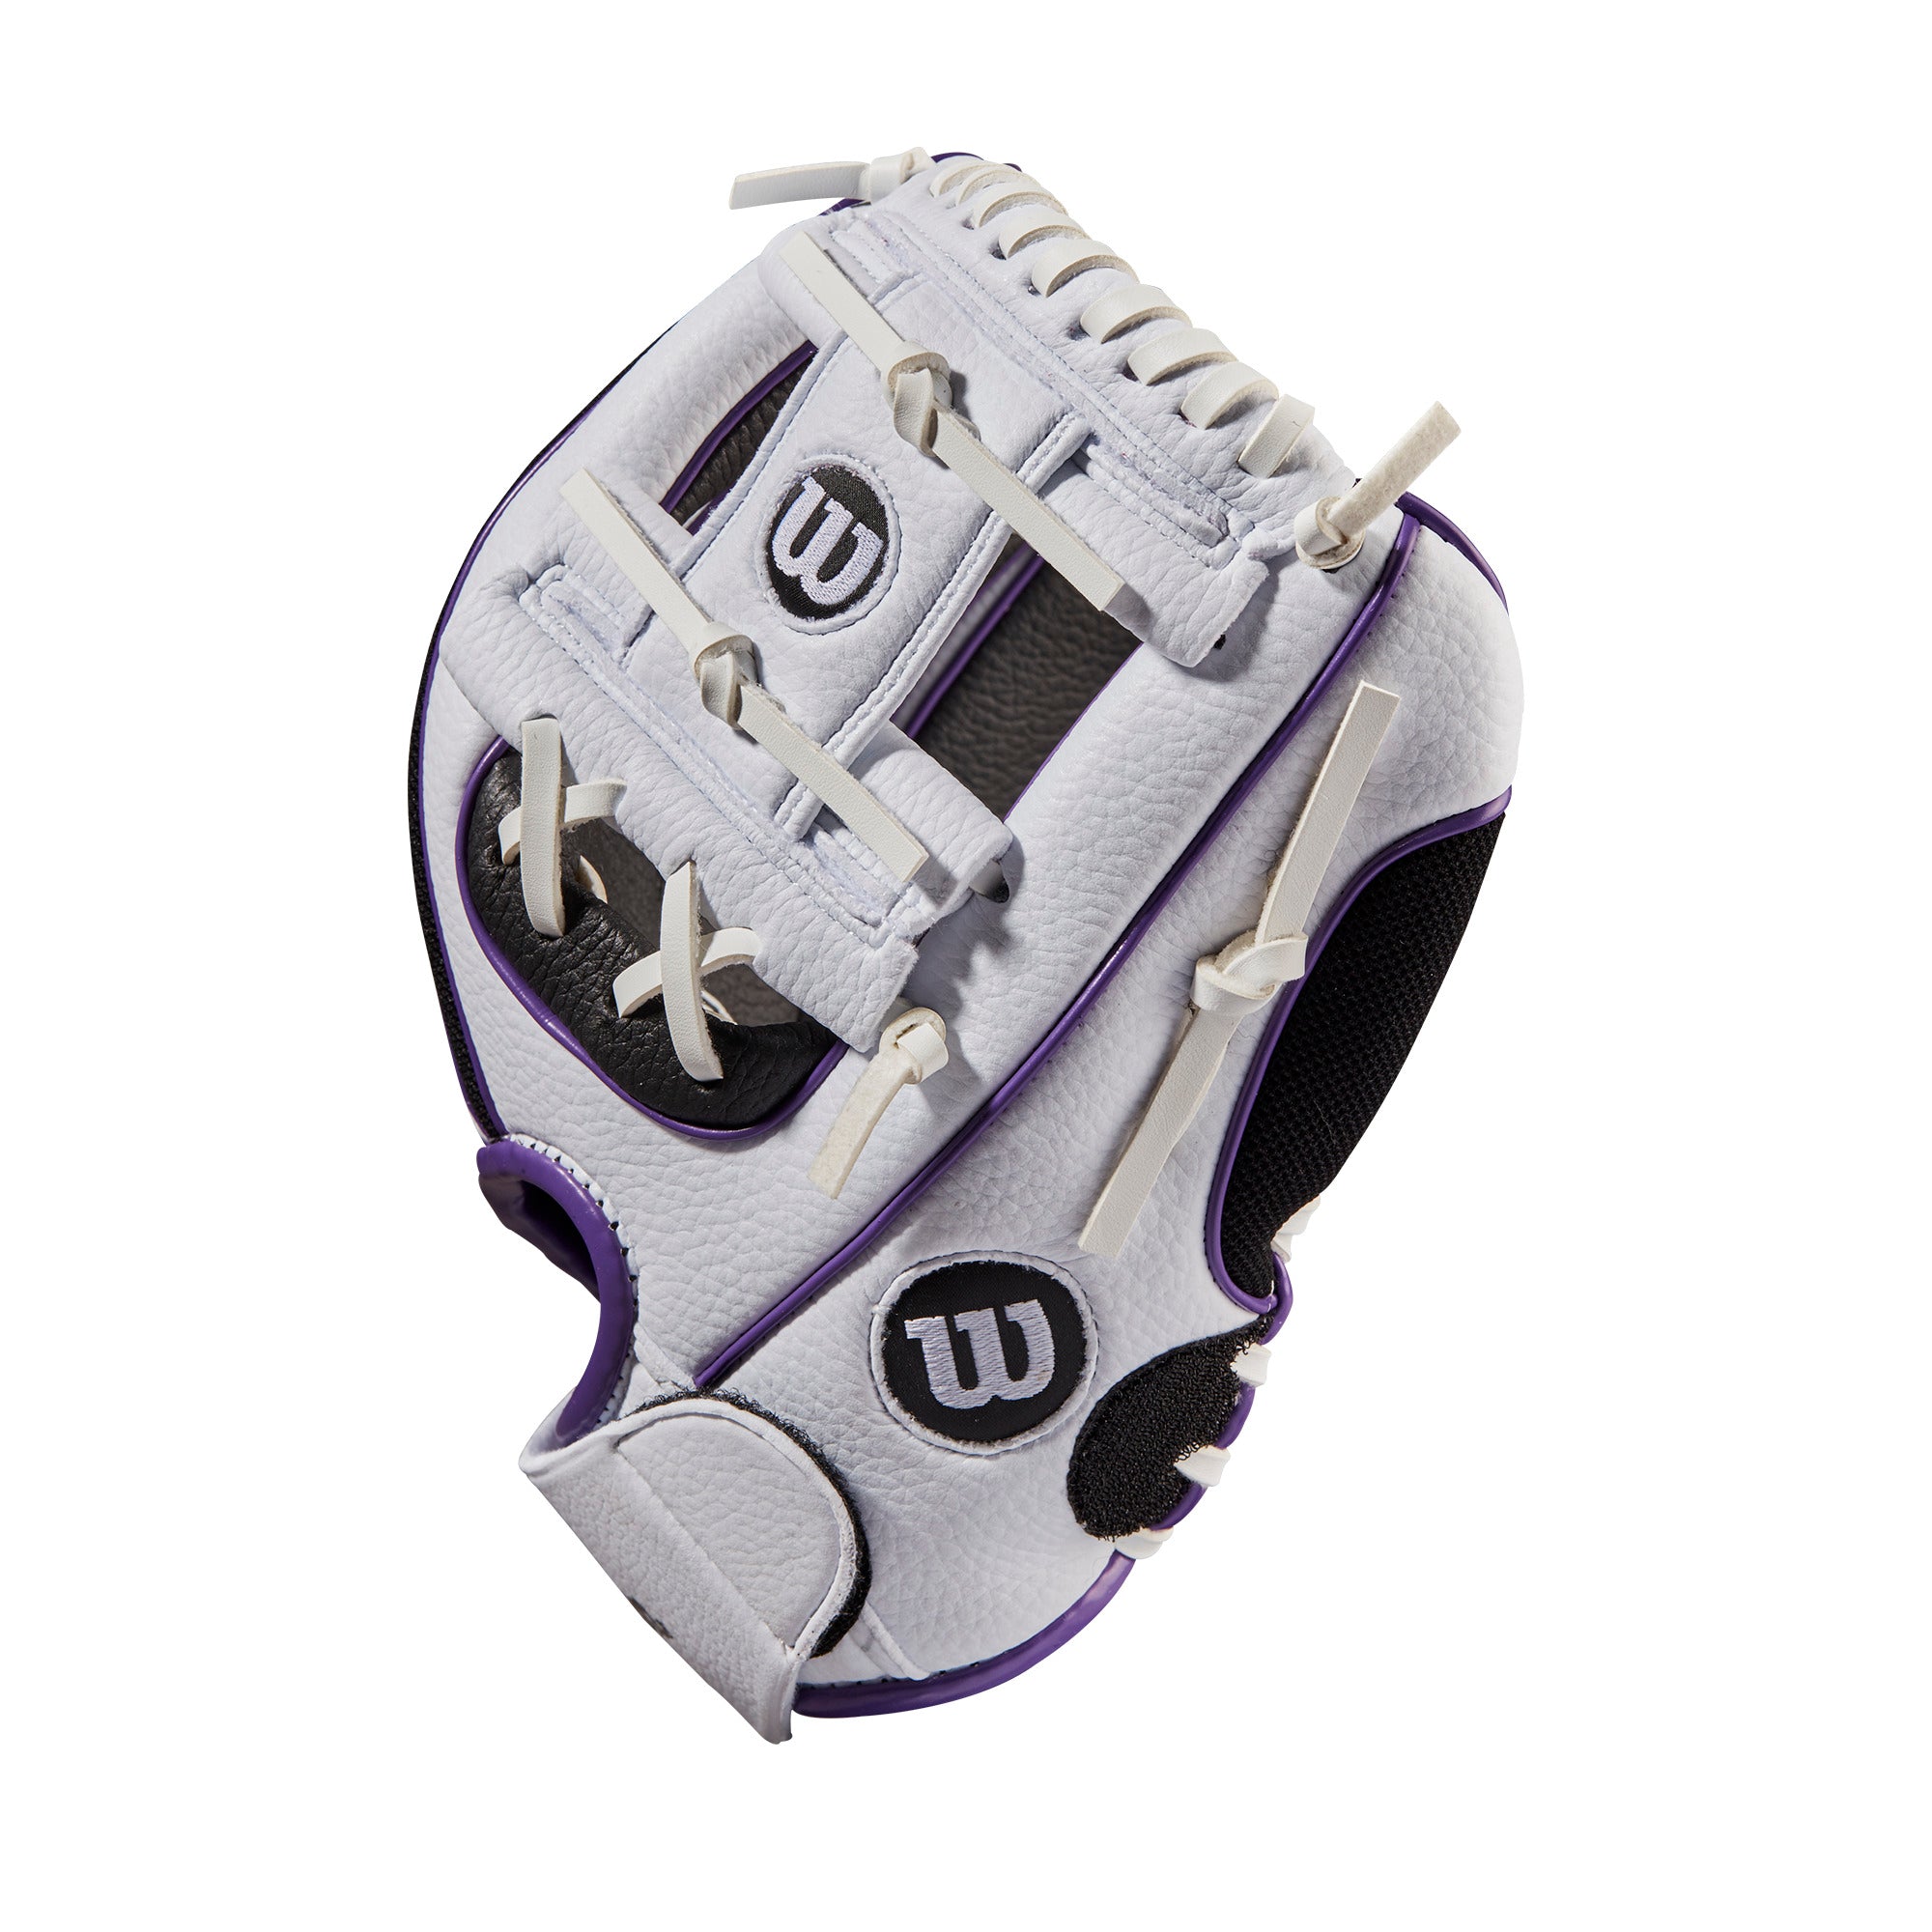 Wilson A200  EZ Catch Baseball 10-inch  White/Black/Purple